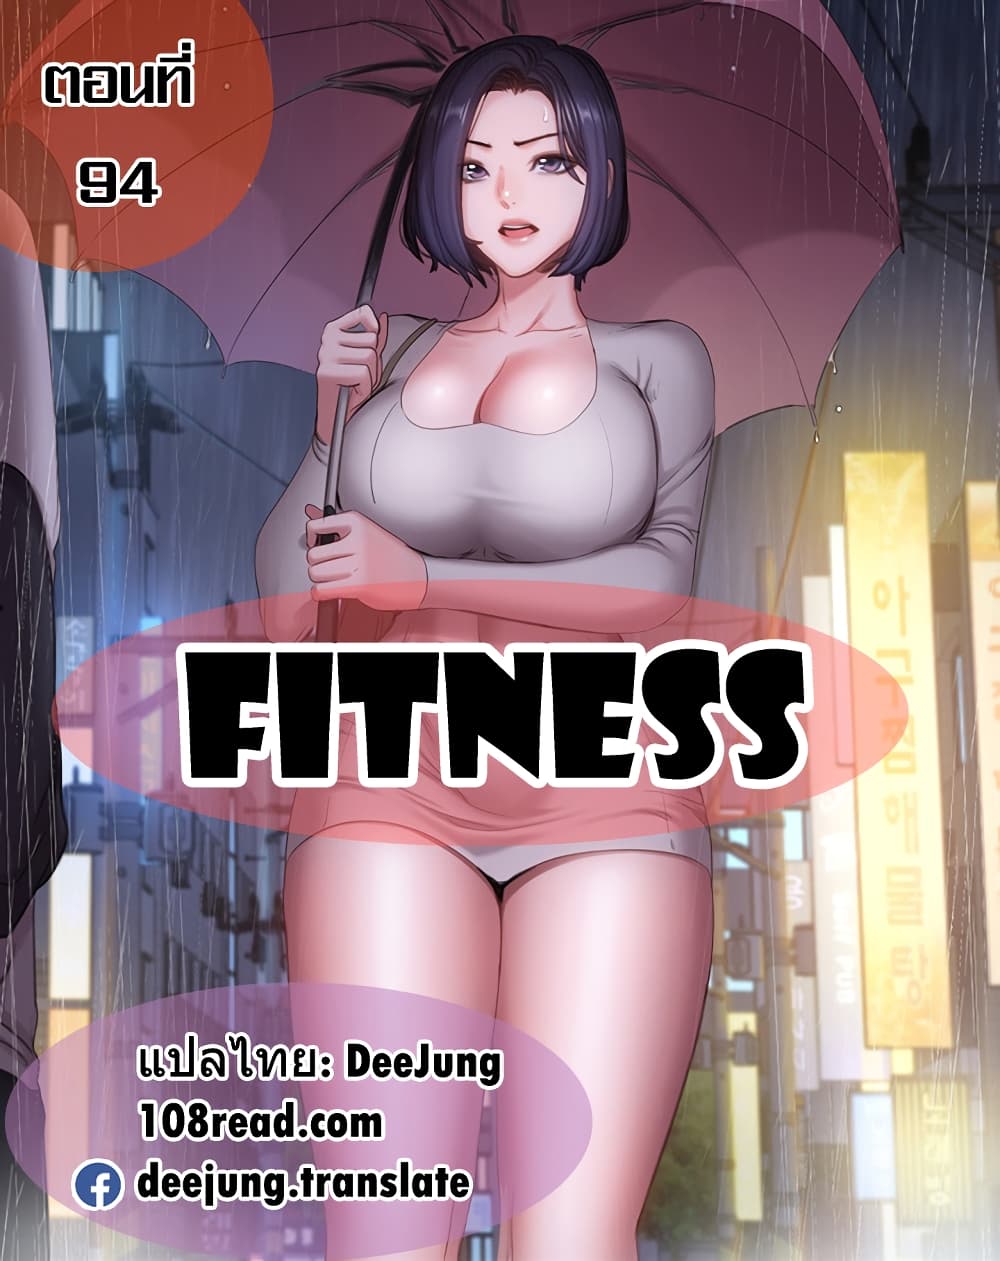 Fitness 94 (1)